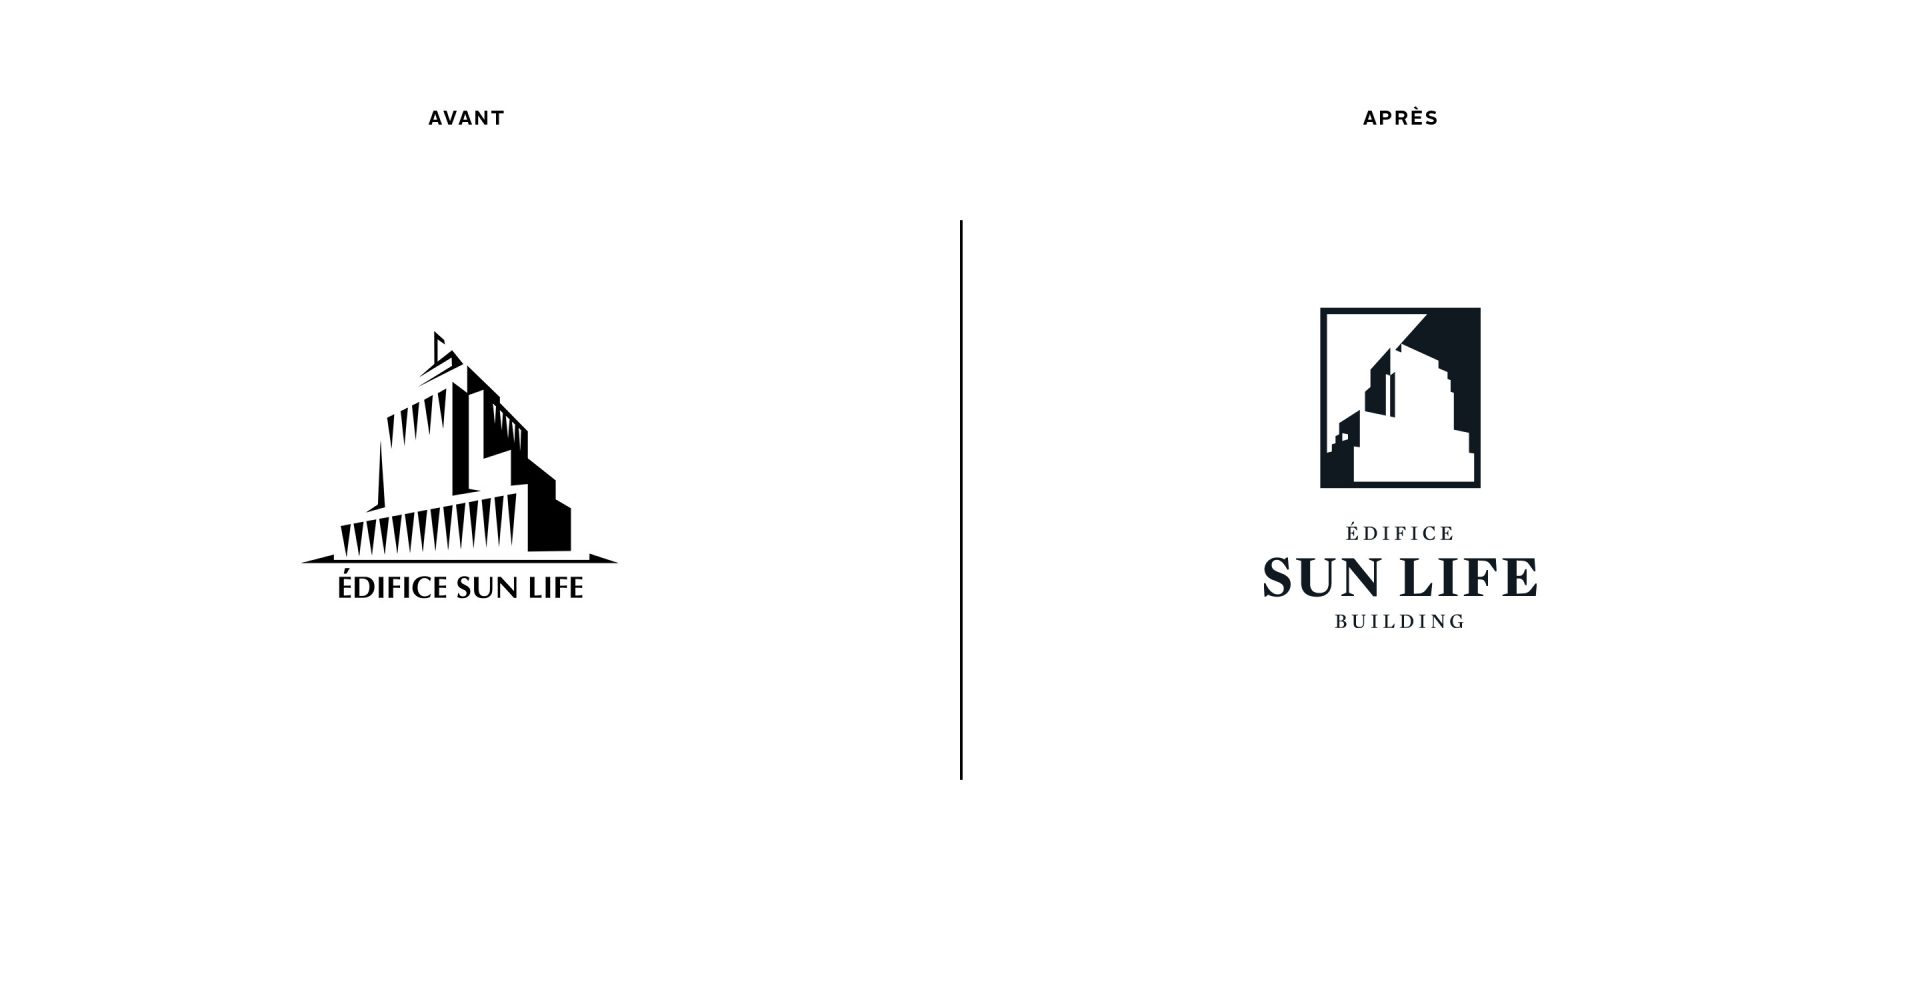 Bentall Kennedy – Sun Life Building